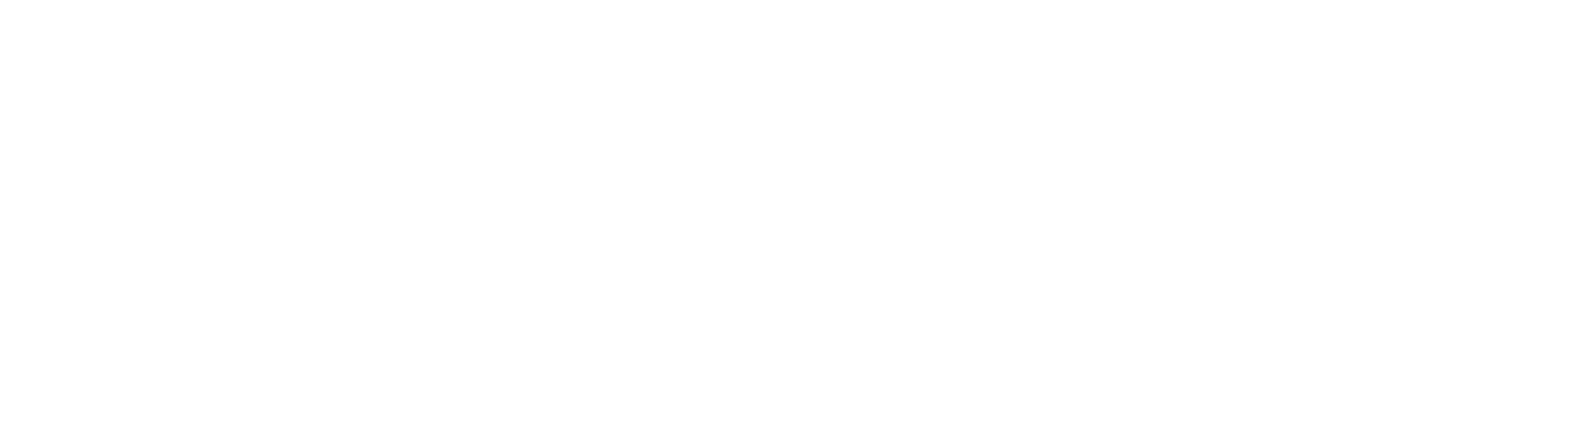 Inspira Technologies logo grand pour les fonds sombres (PNG transparent)